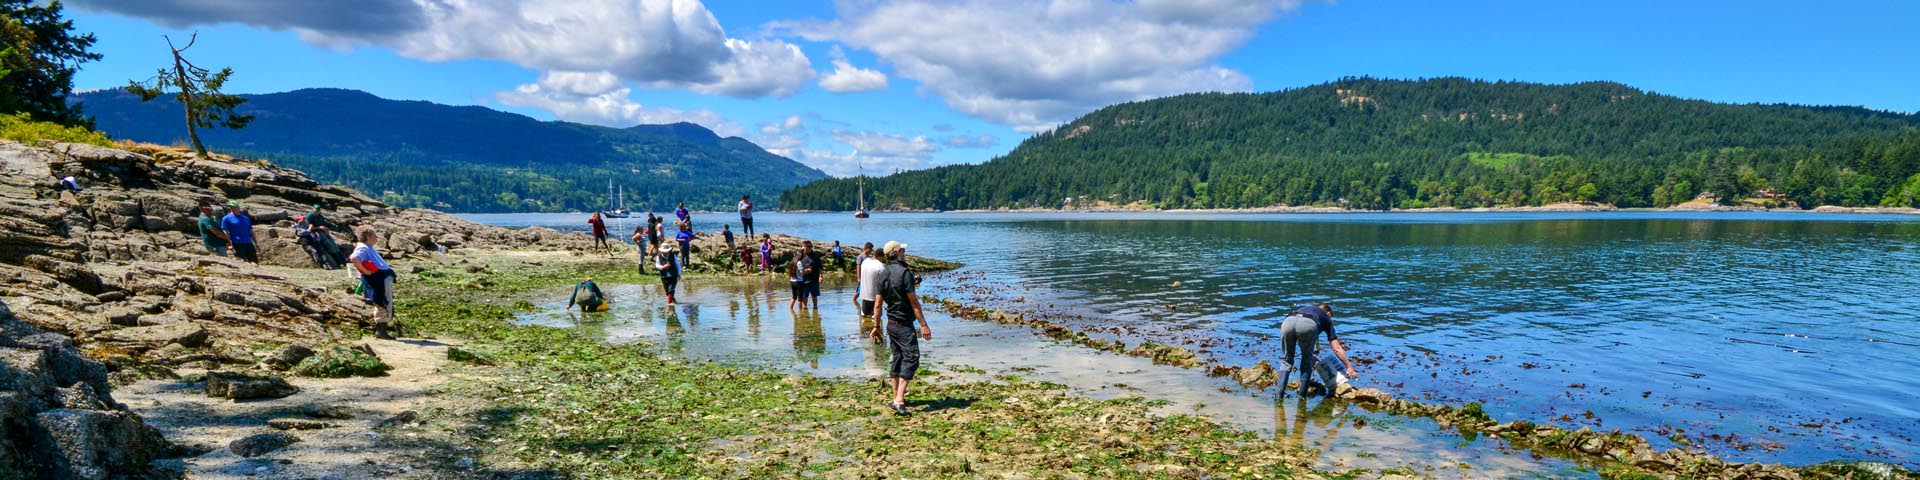 Coast Salish peoples walking along the beach removing kelp and sea lettuce. 